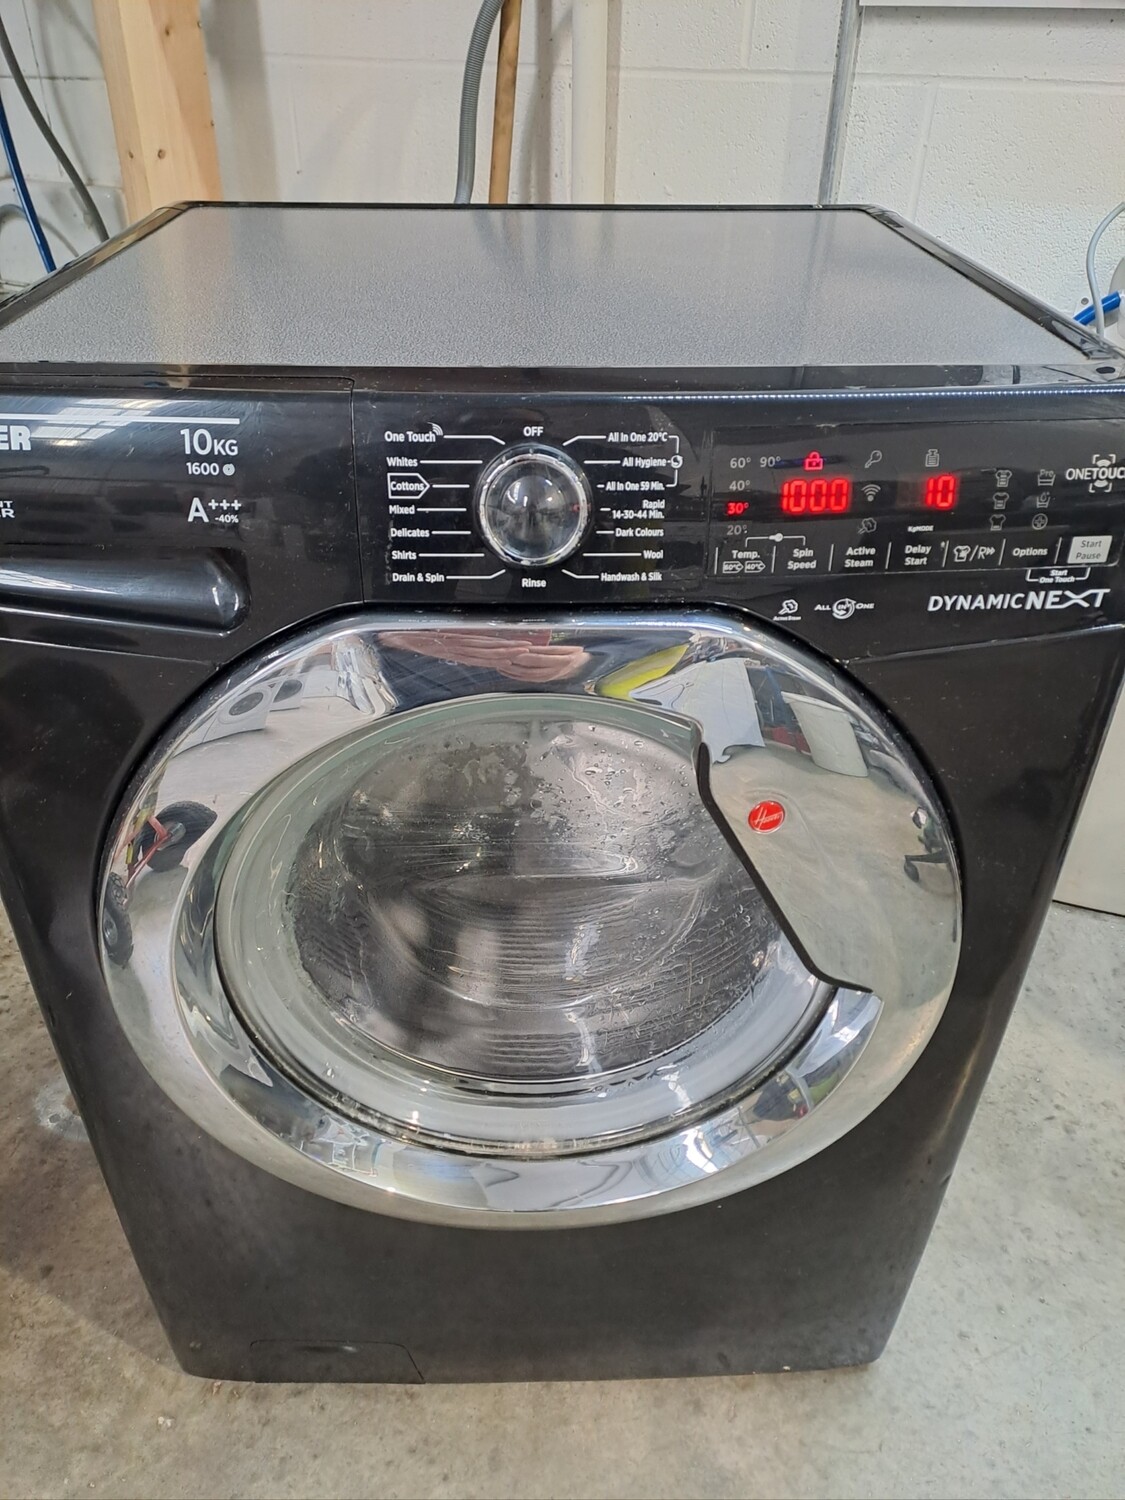 Hoover DXOA610AHFN7B A+++ 10kg Load, 1600 Spin Washing Machine - Black - Refurbished - 6 Month Guarantee